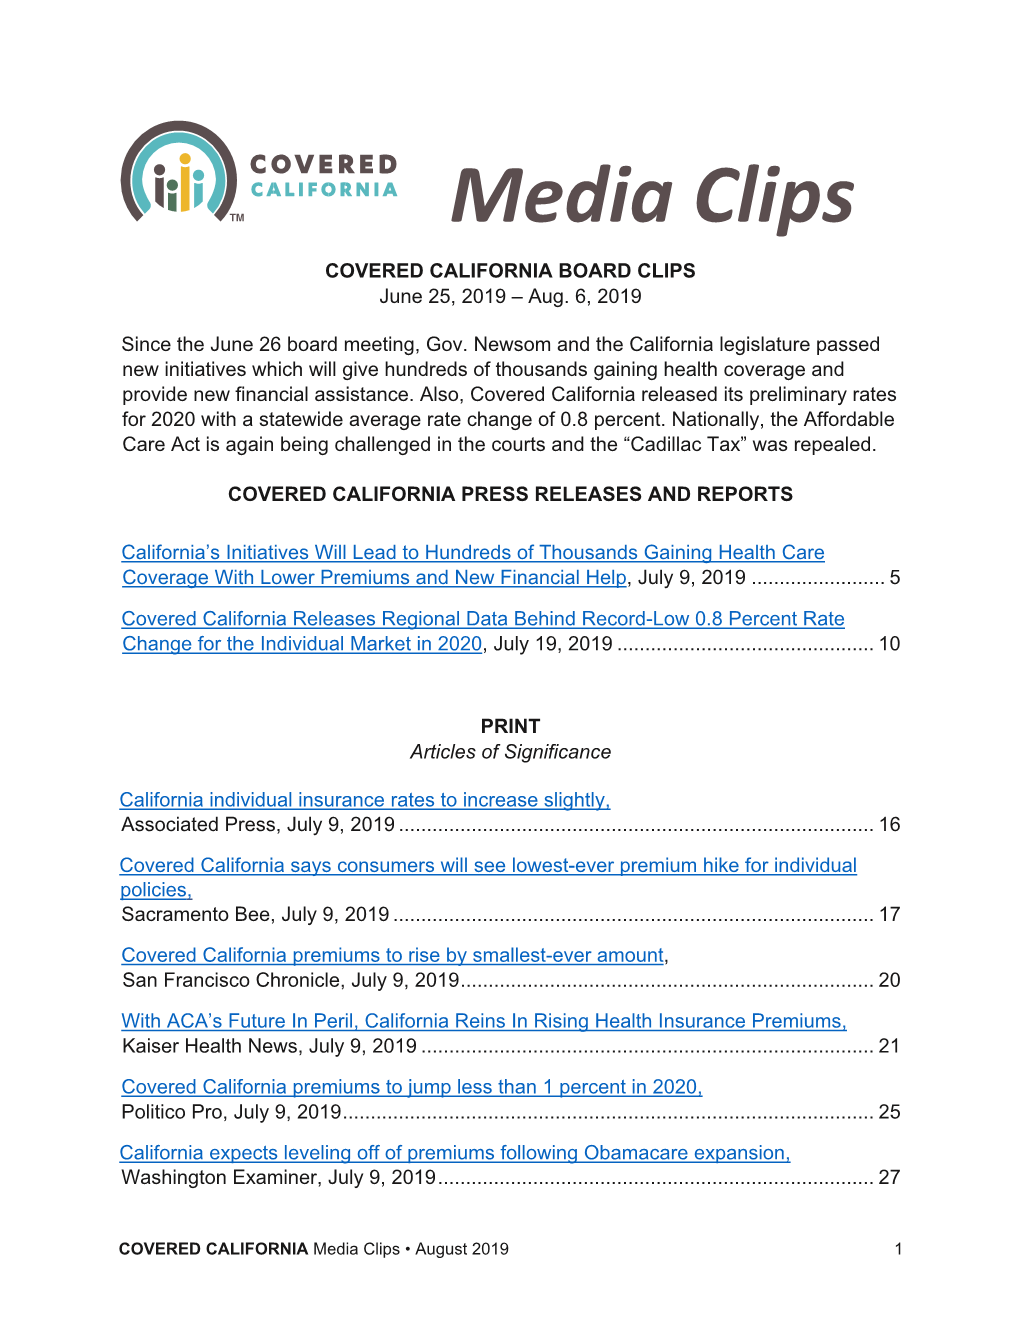 Press and Media